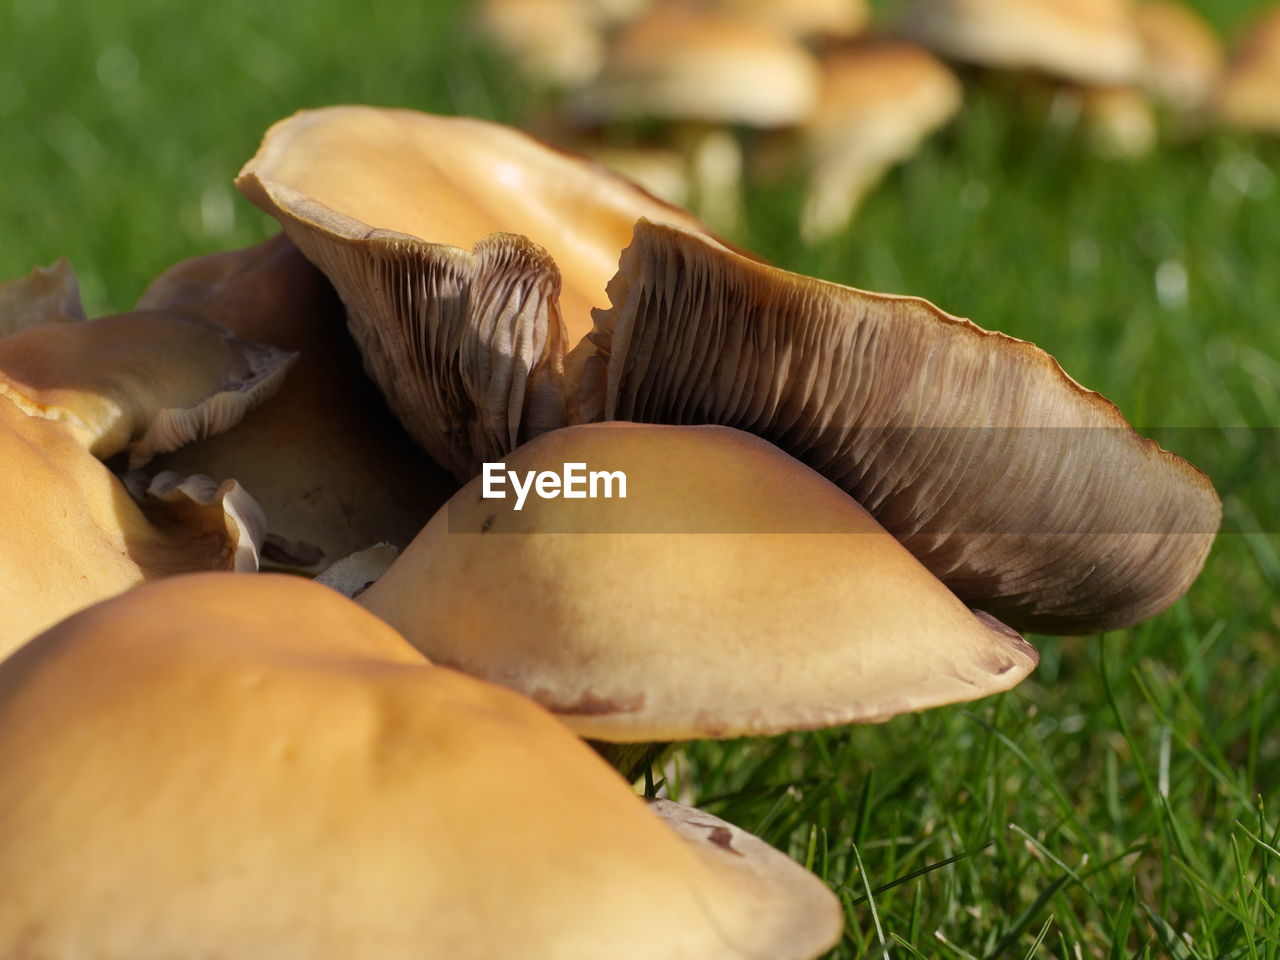 Close-up of mushrooms growing on grassy field